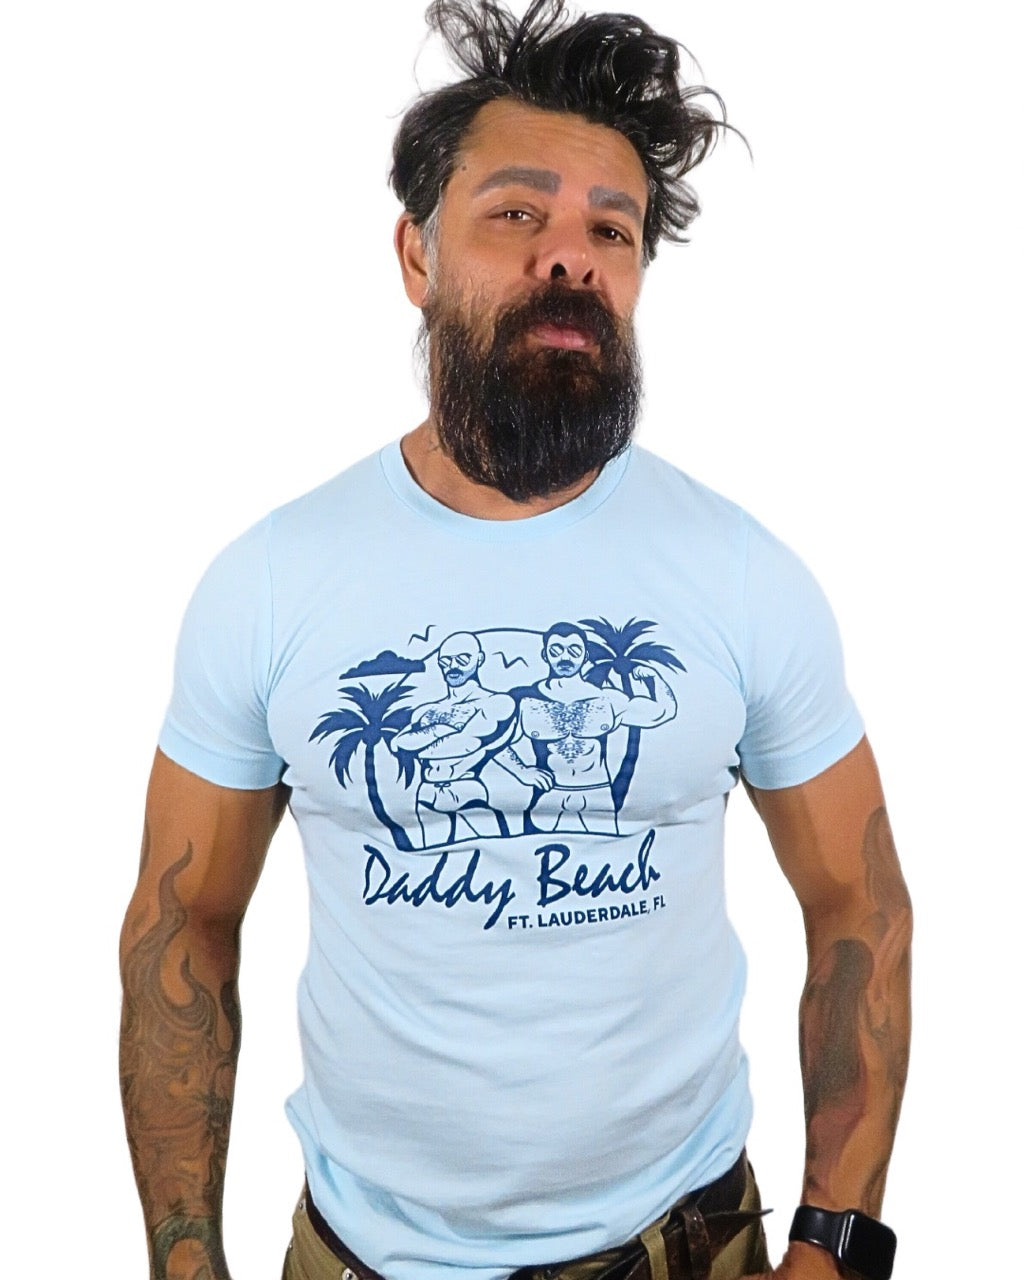 Daddy Beach T-Shirt in Ice Blue